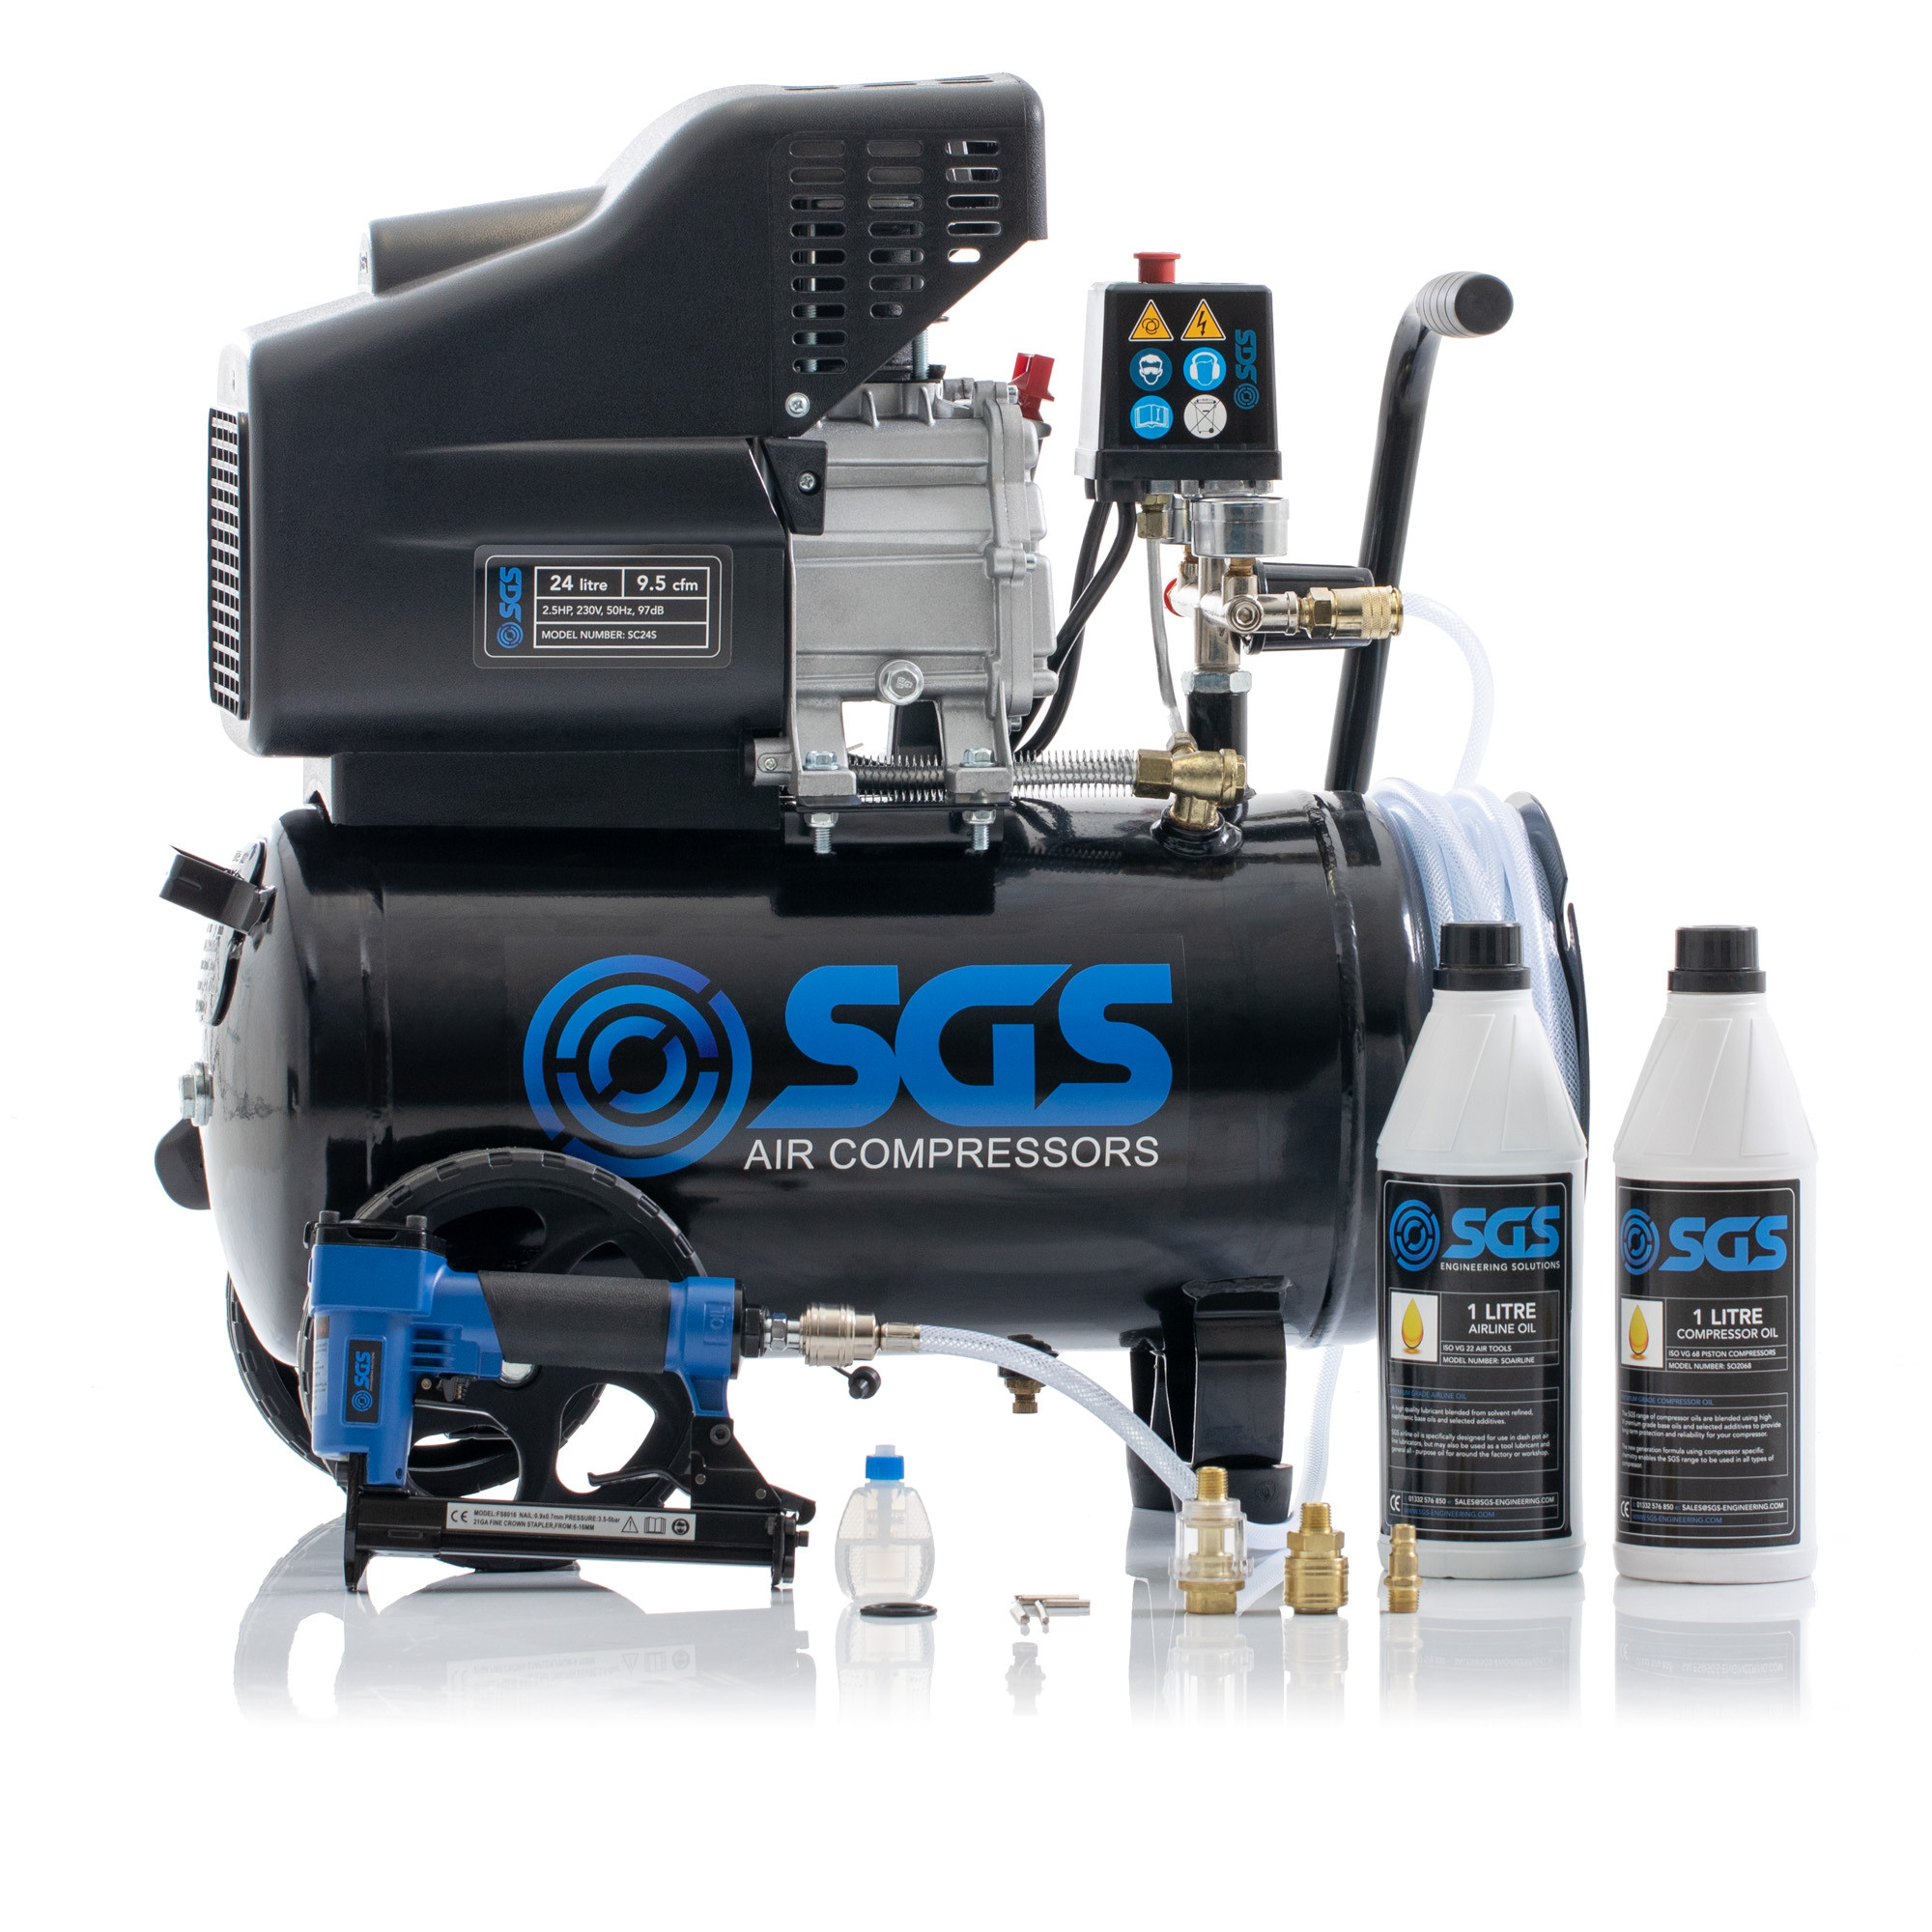 SGS 24升直接驱动空气压缩机集成软管卷盘&订书机工具包2.5 - 9.5 cfm惠普24 l